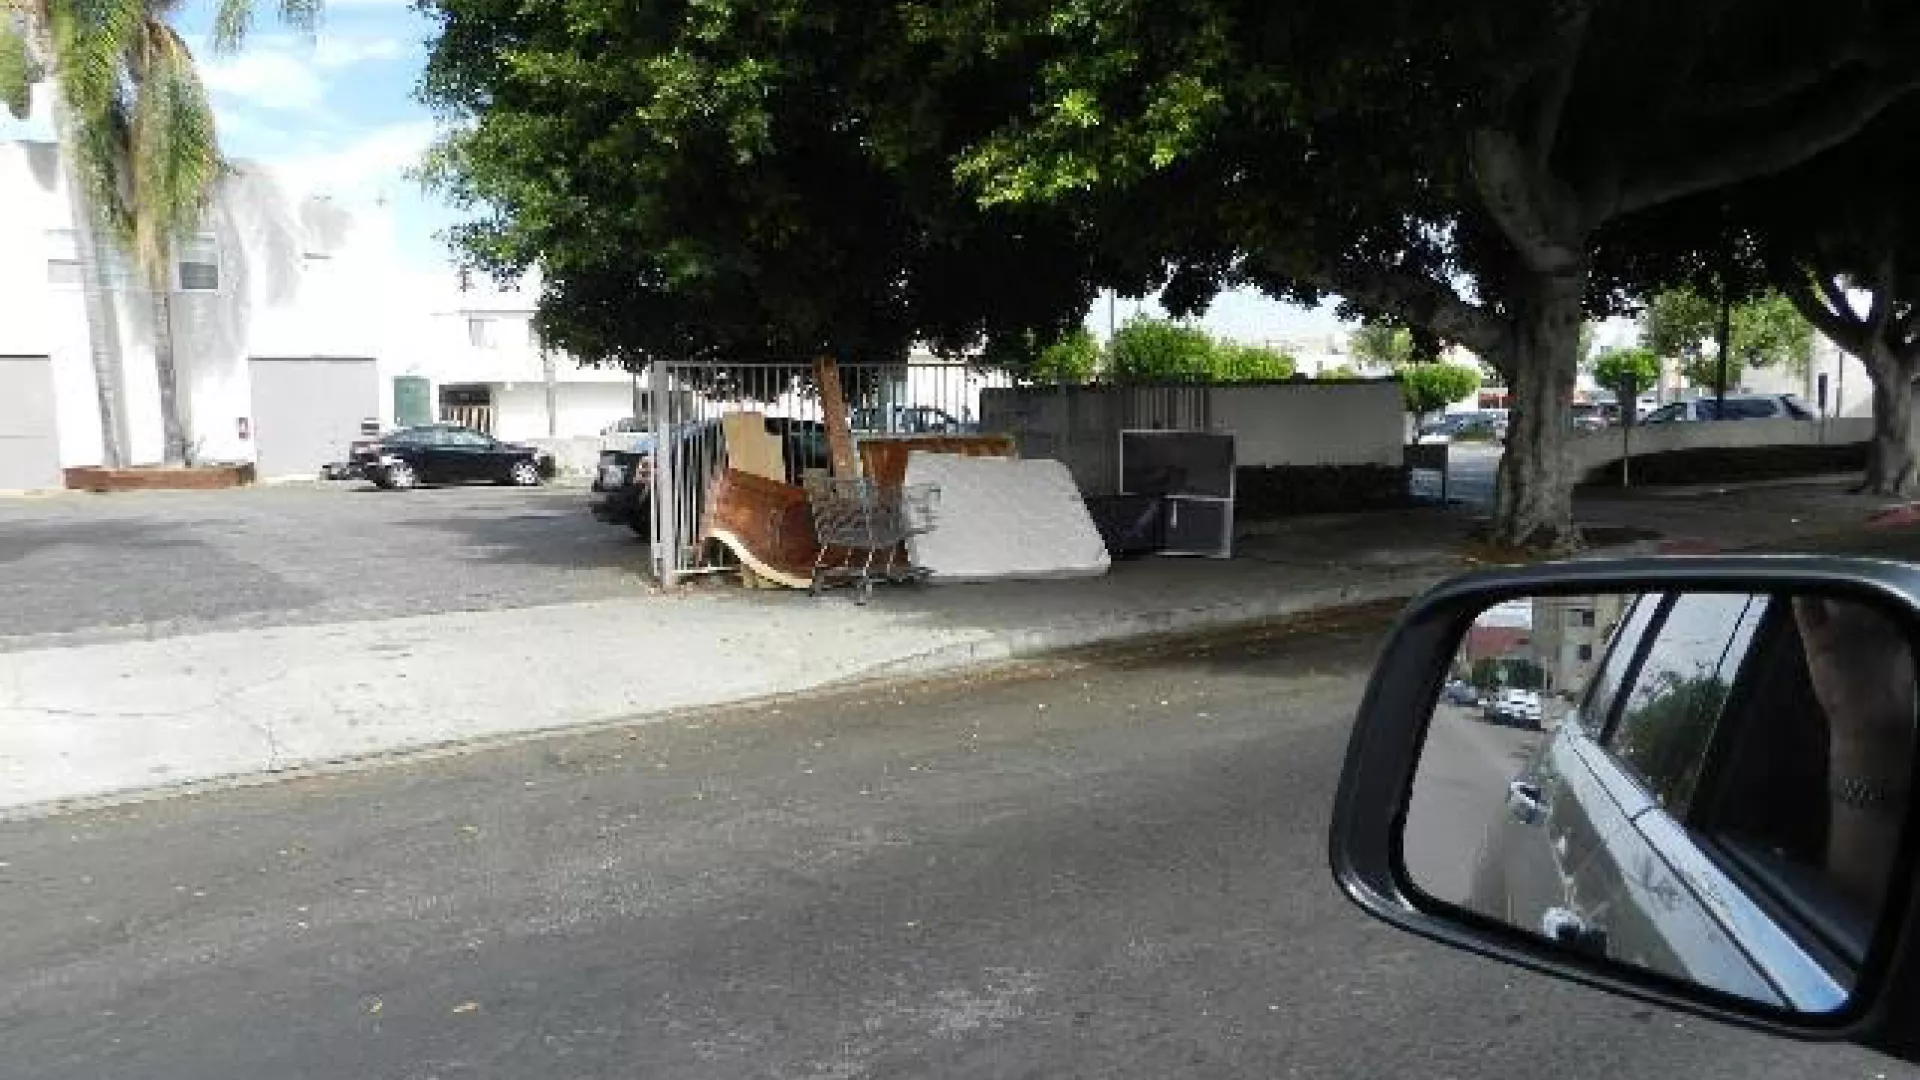 Abandoned trash on street